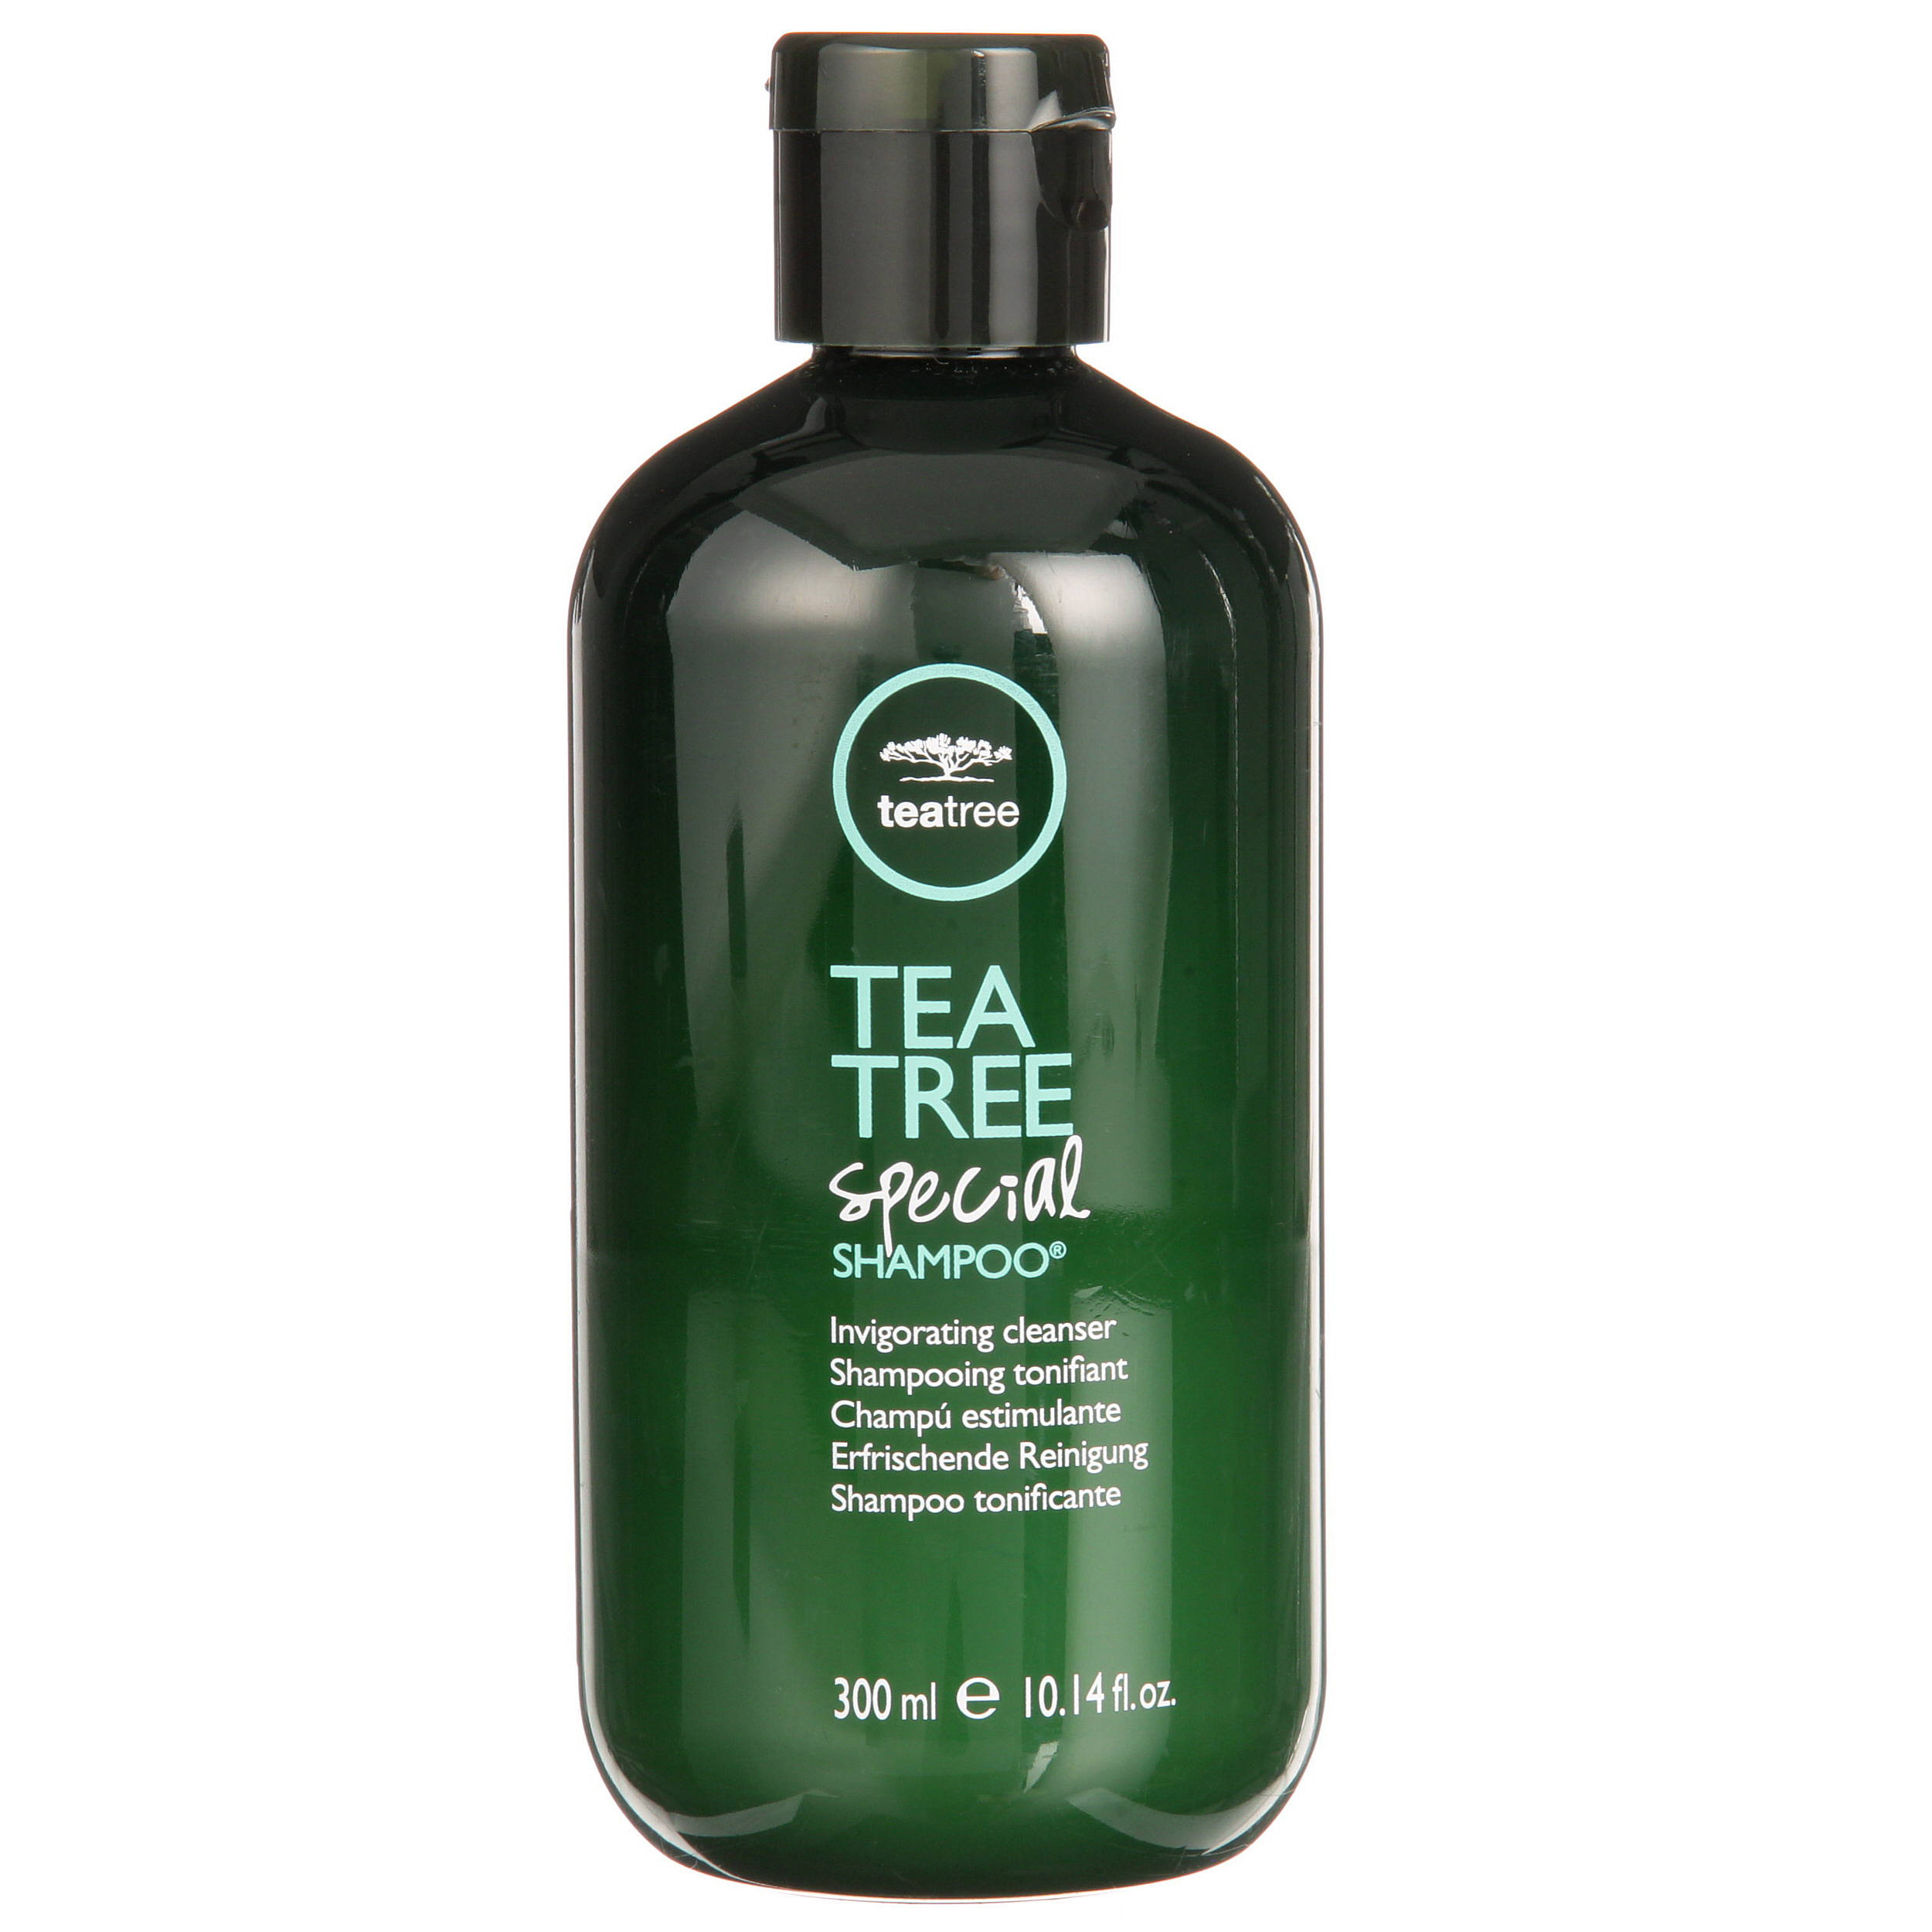 Paul Mitchell Moisturizing & Shine Enhancing Daily Shampoo with Tea Tree Oil, Scented, 10.14 fl oz - image 1 of 5